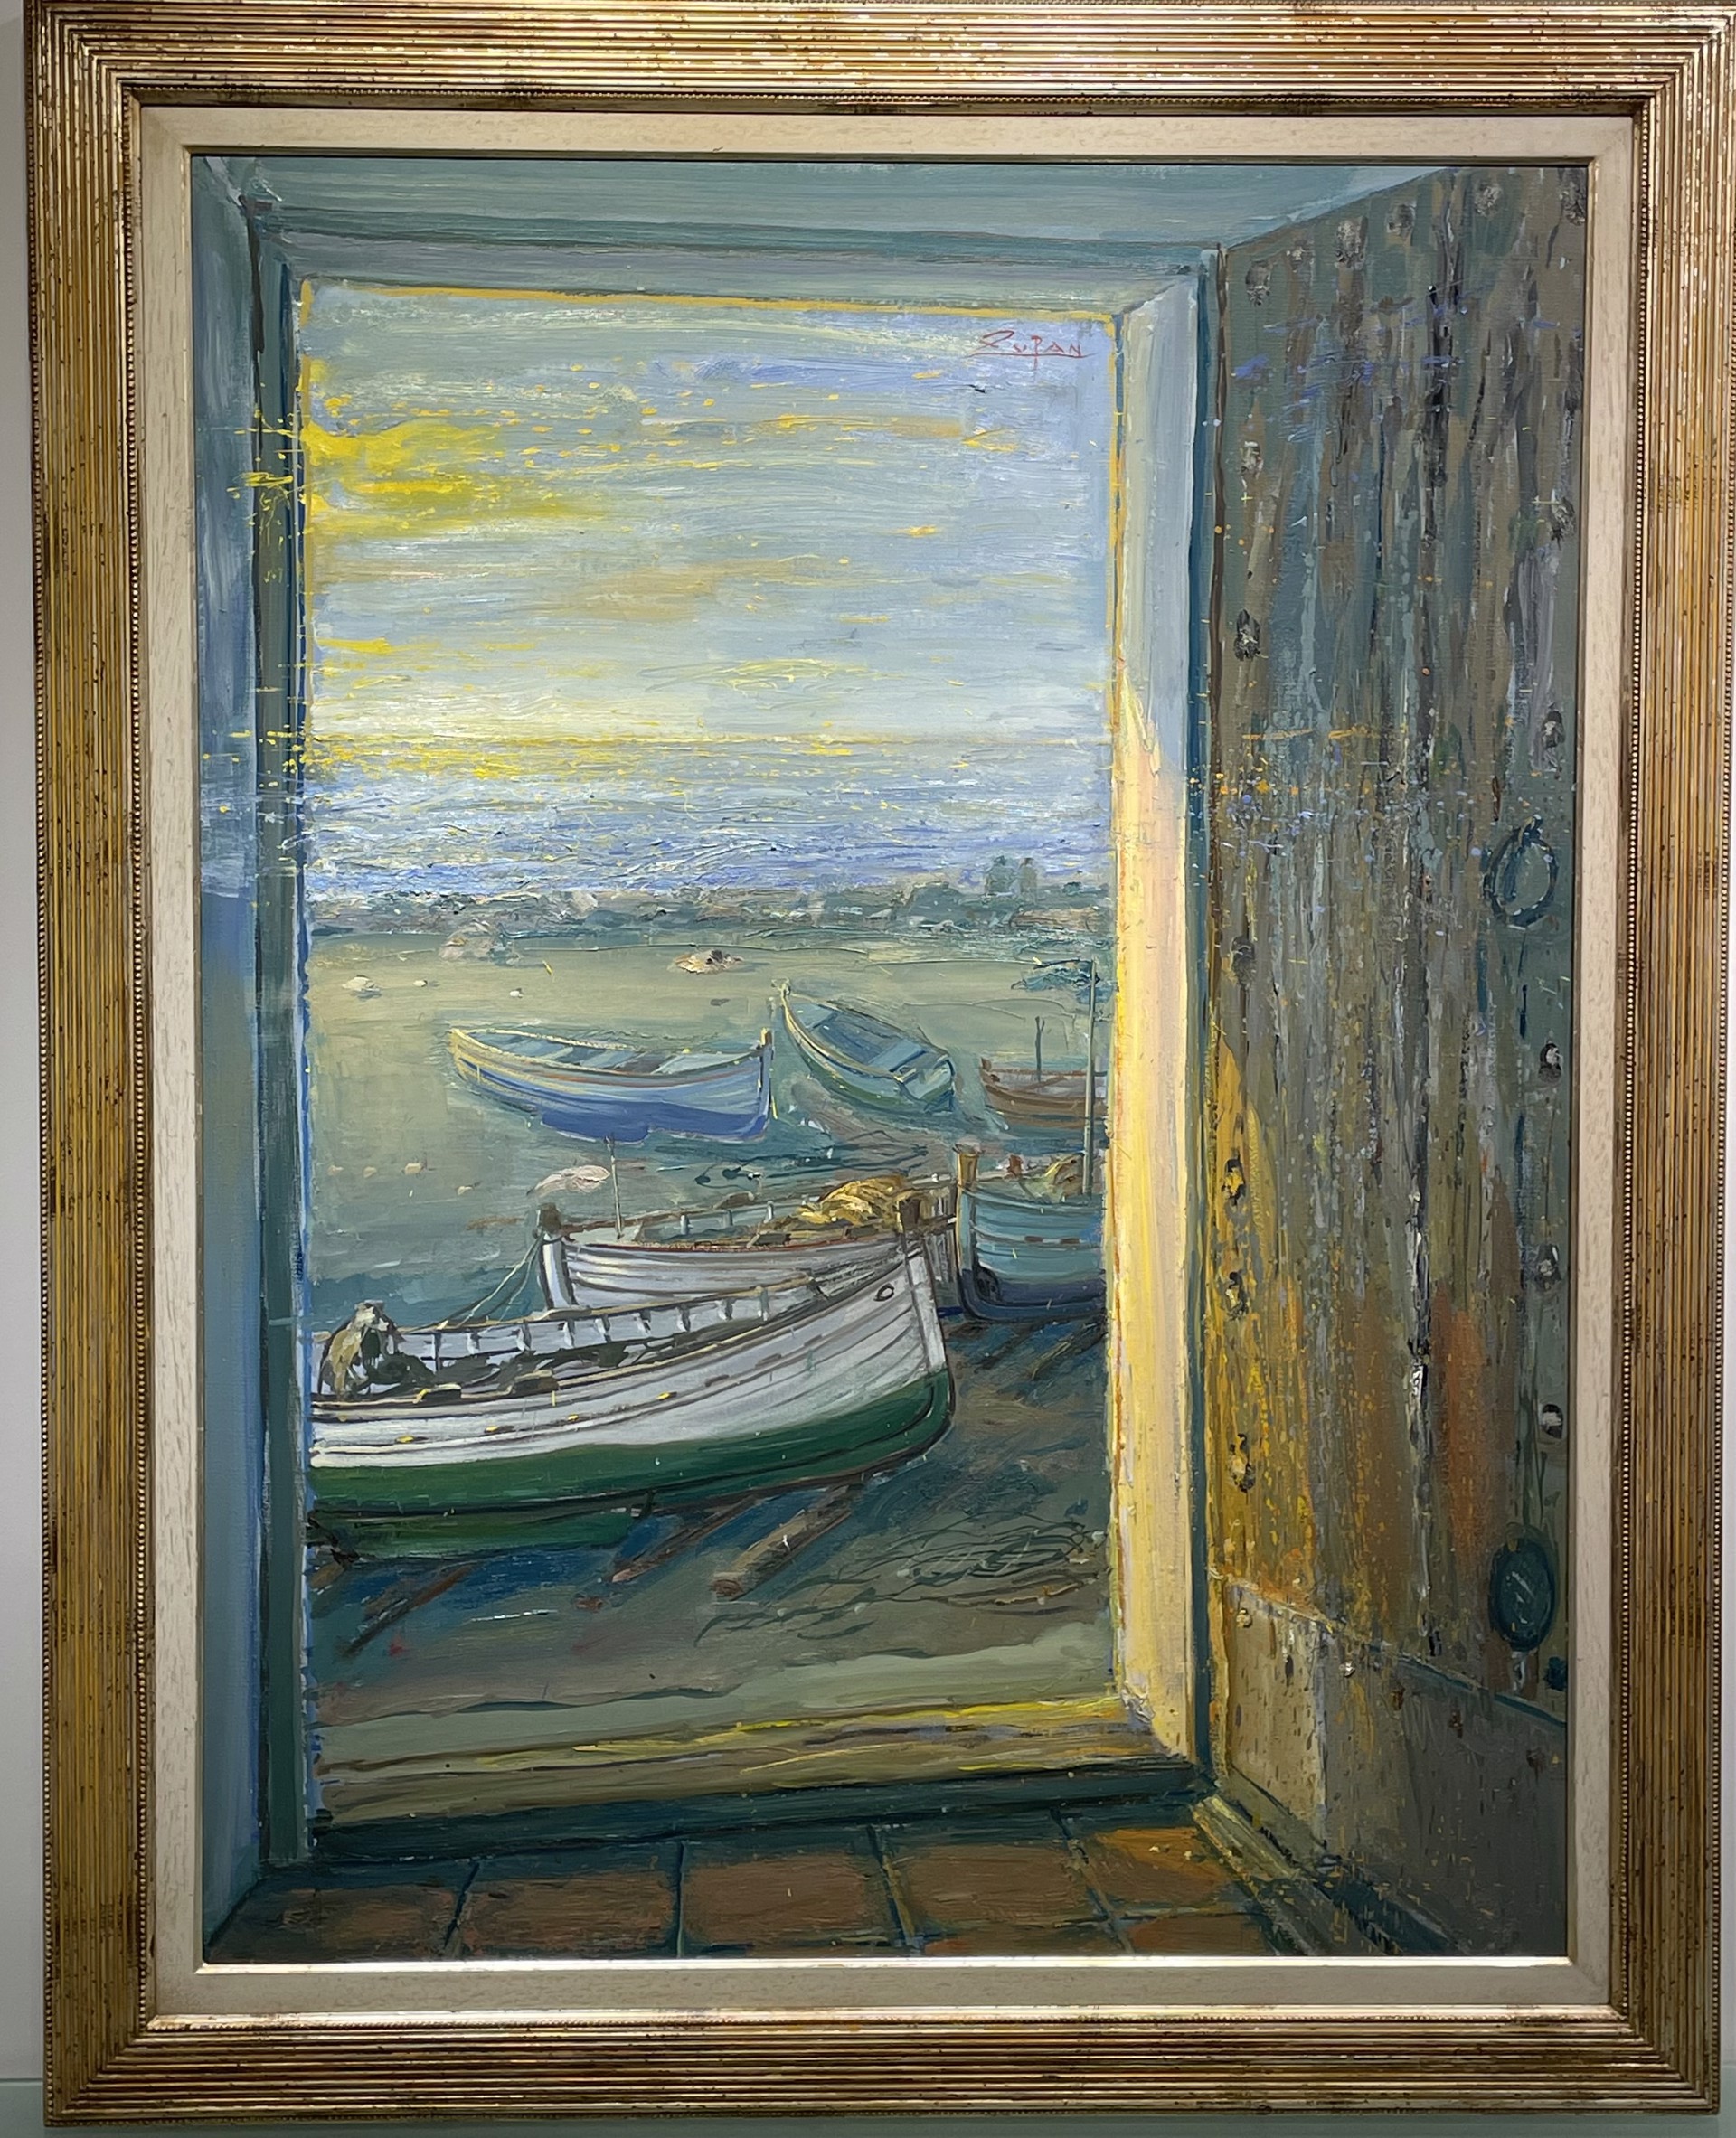 Door by the Sea by Bruno Zupan